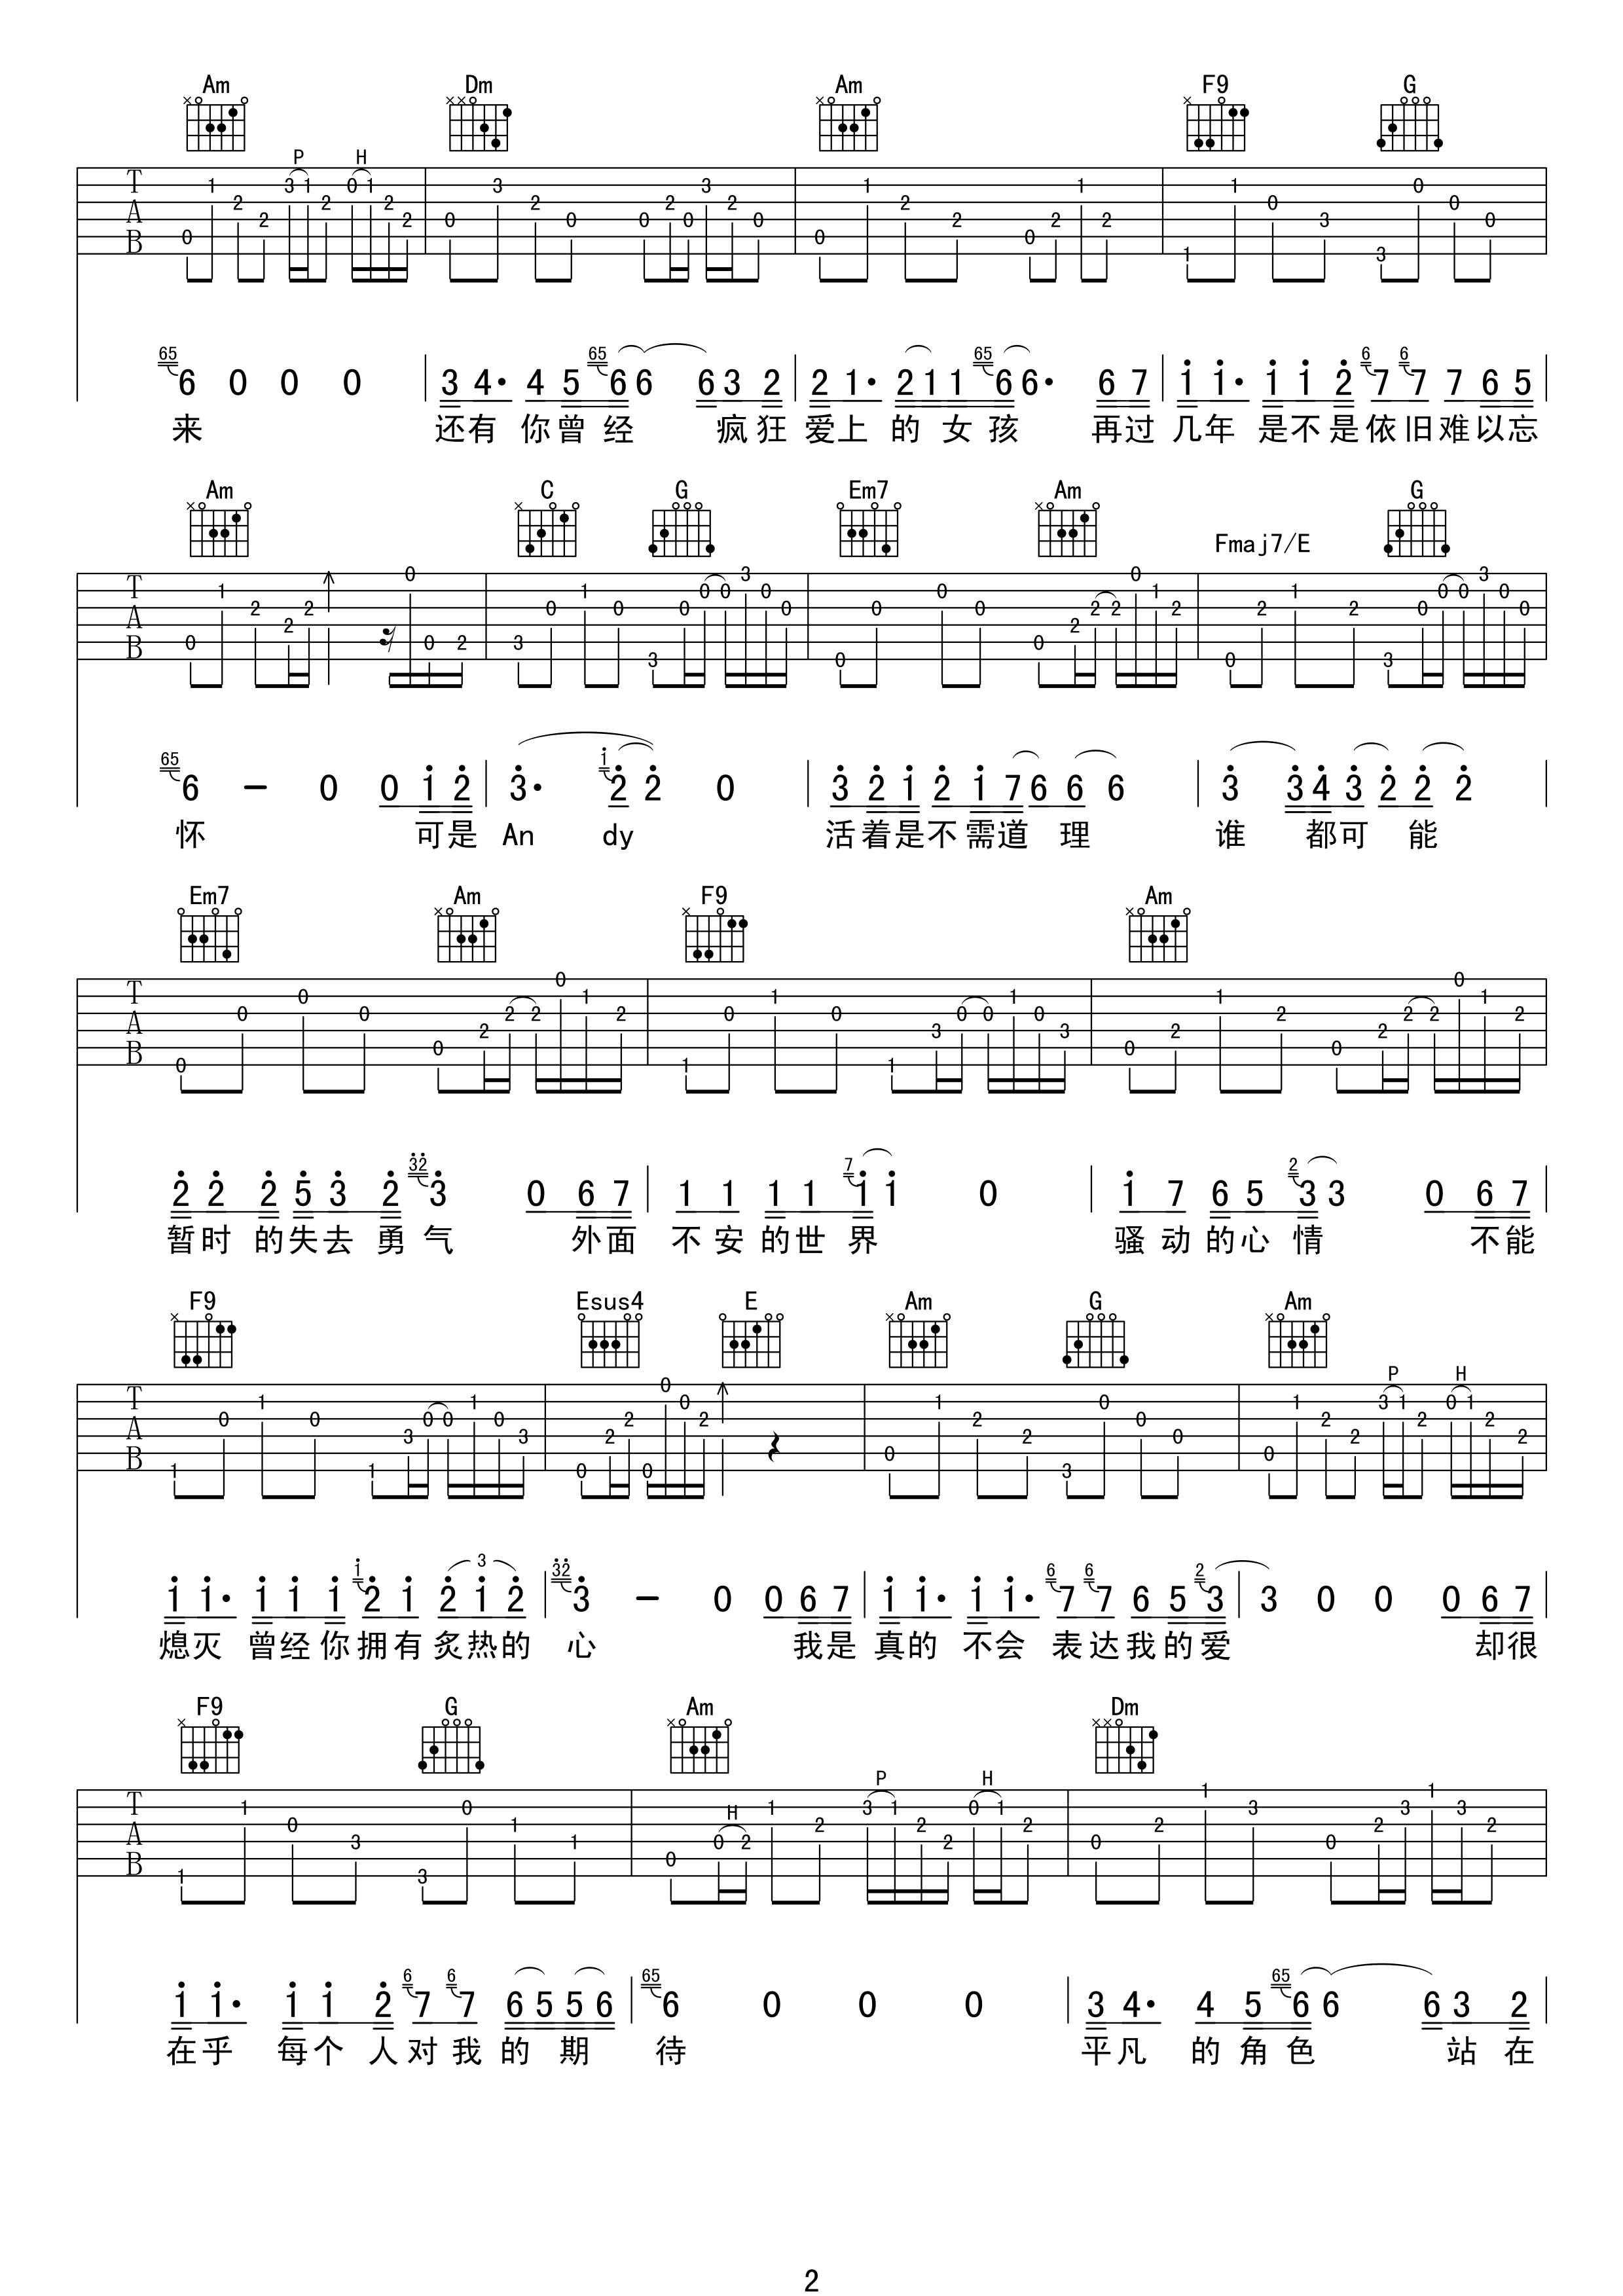 andy吉他谱,原版阿杜歌曲,简单C调弹唱教学,17吉他版六线指弹简谱图